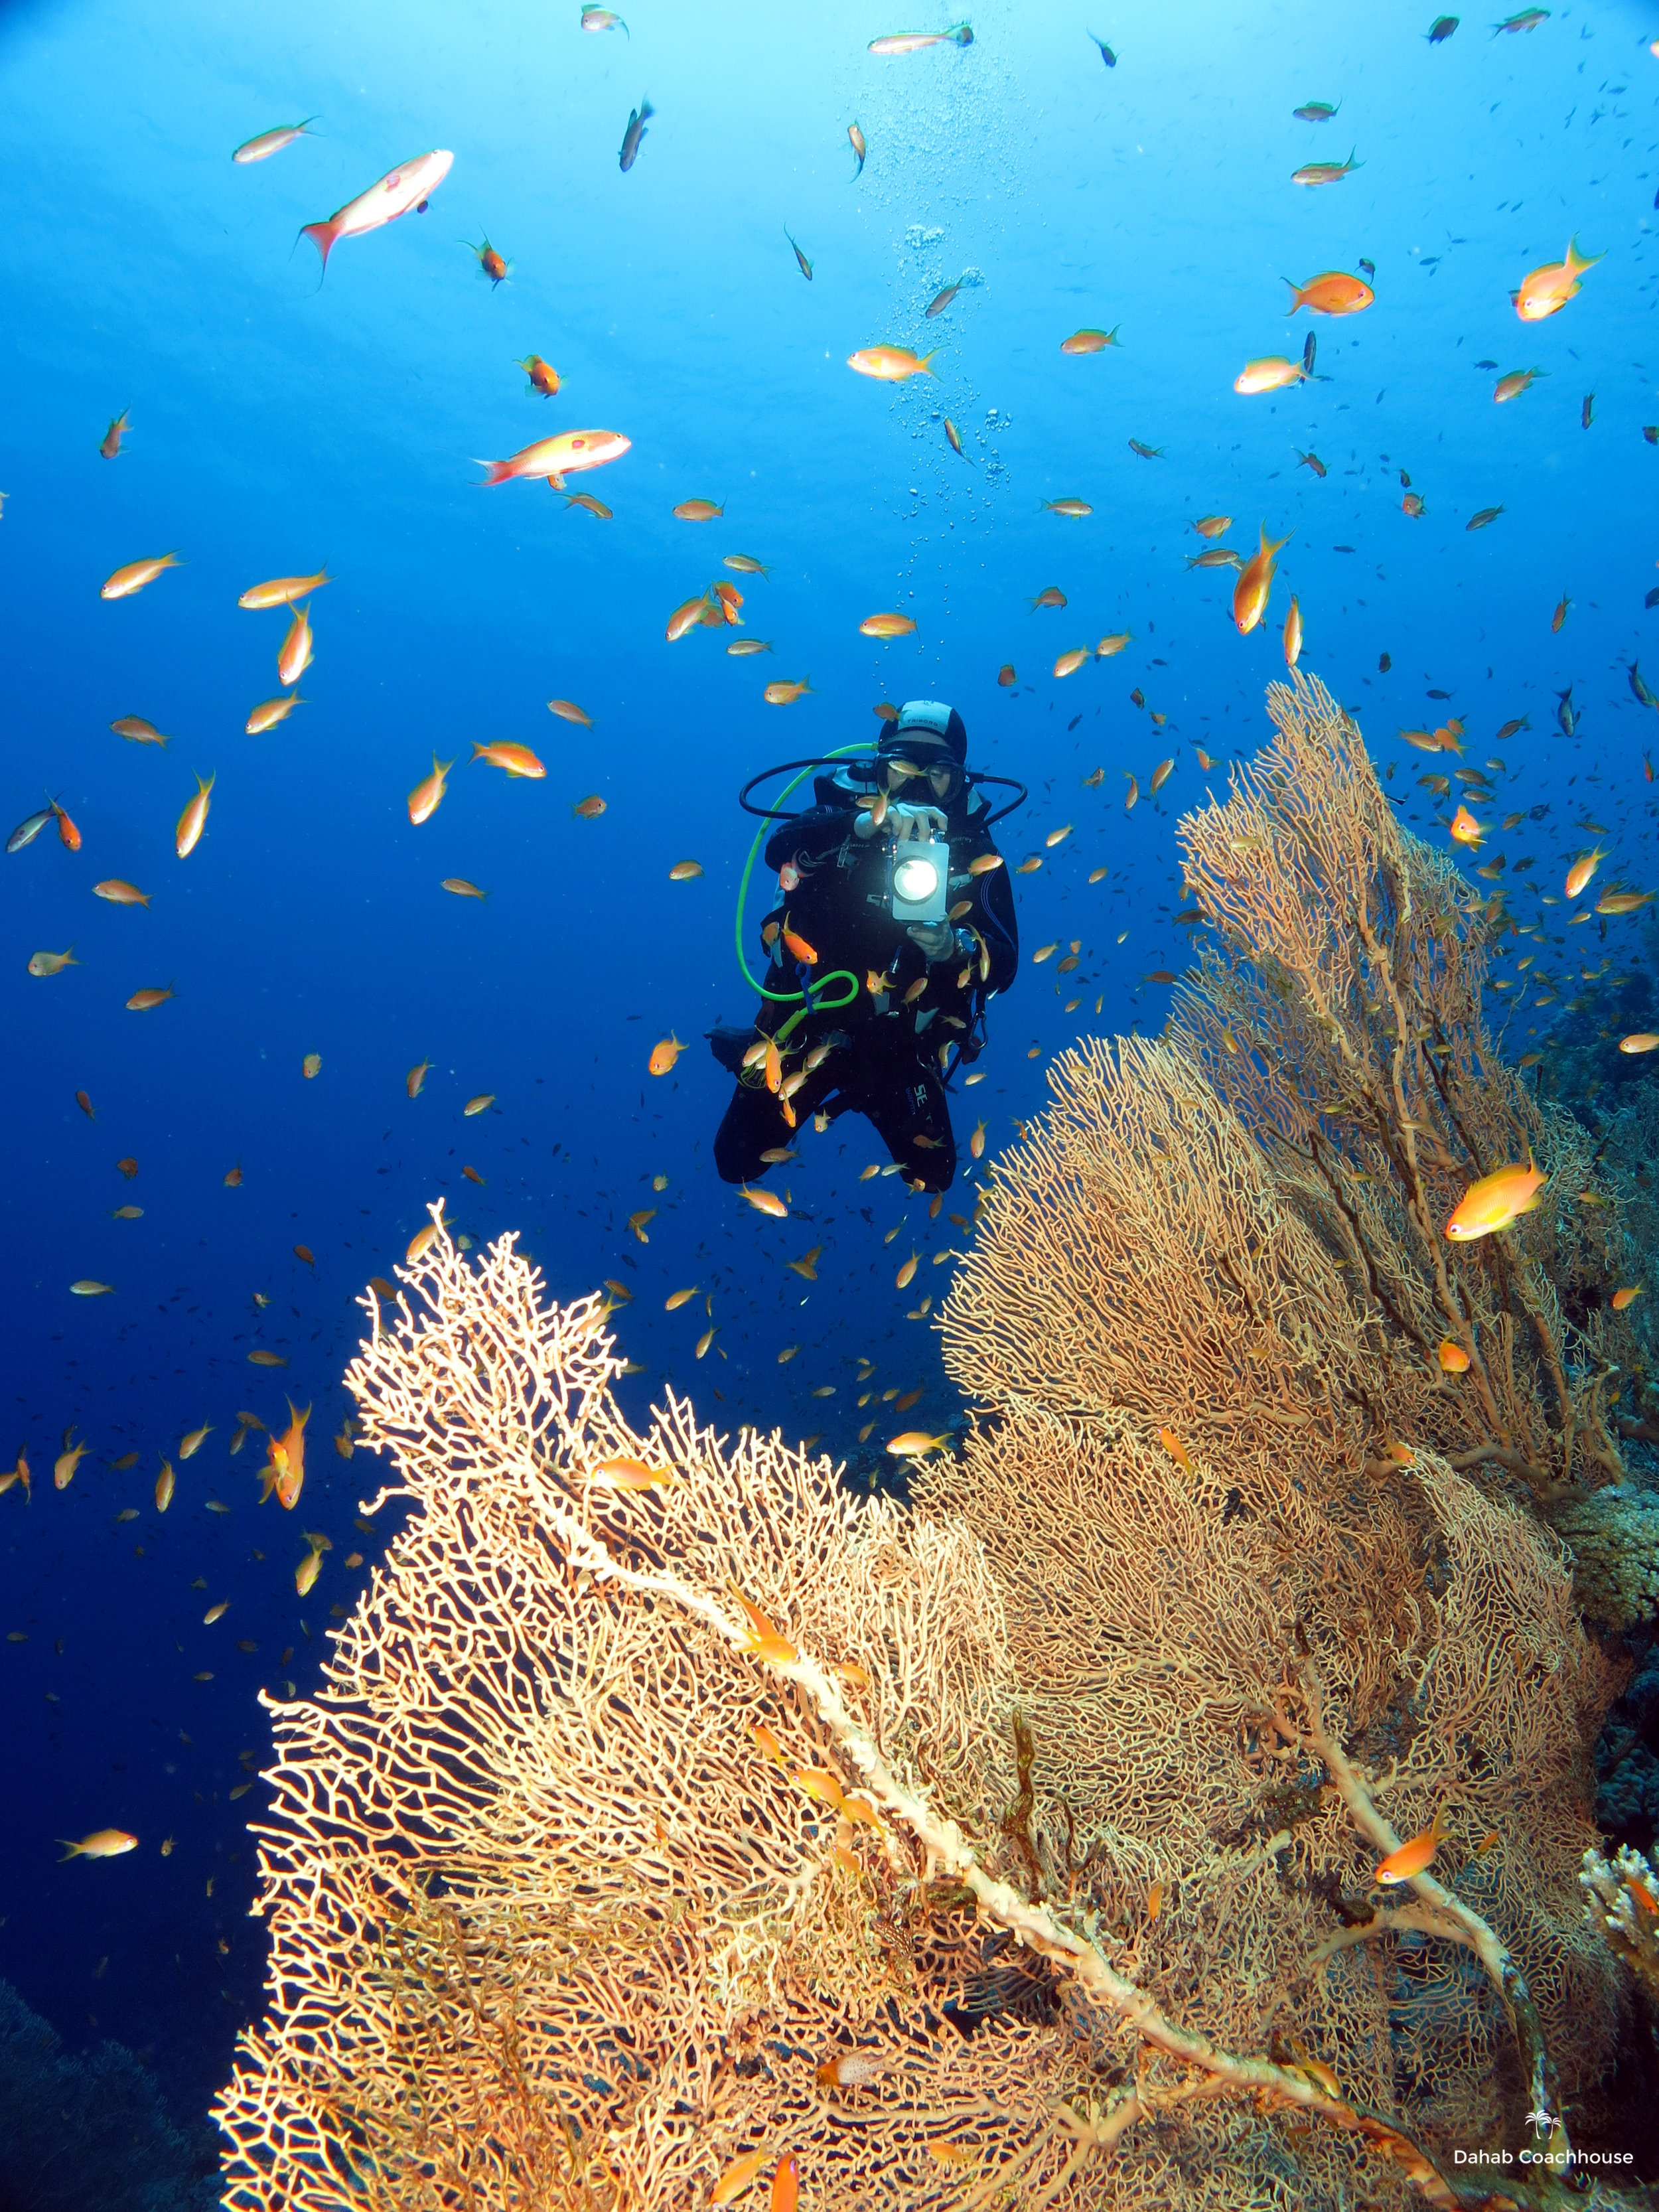 Dahab_Coachhouse_Egypt_Red_Sea_Diving_Beach_Accommodation_Holiday_Travel_Diver_Photo.JPG